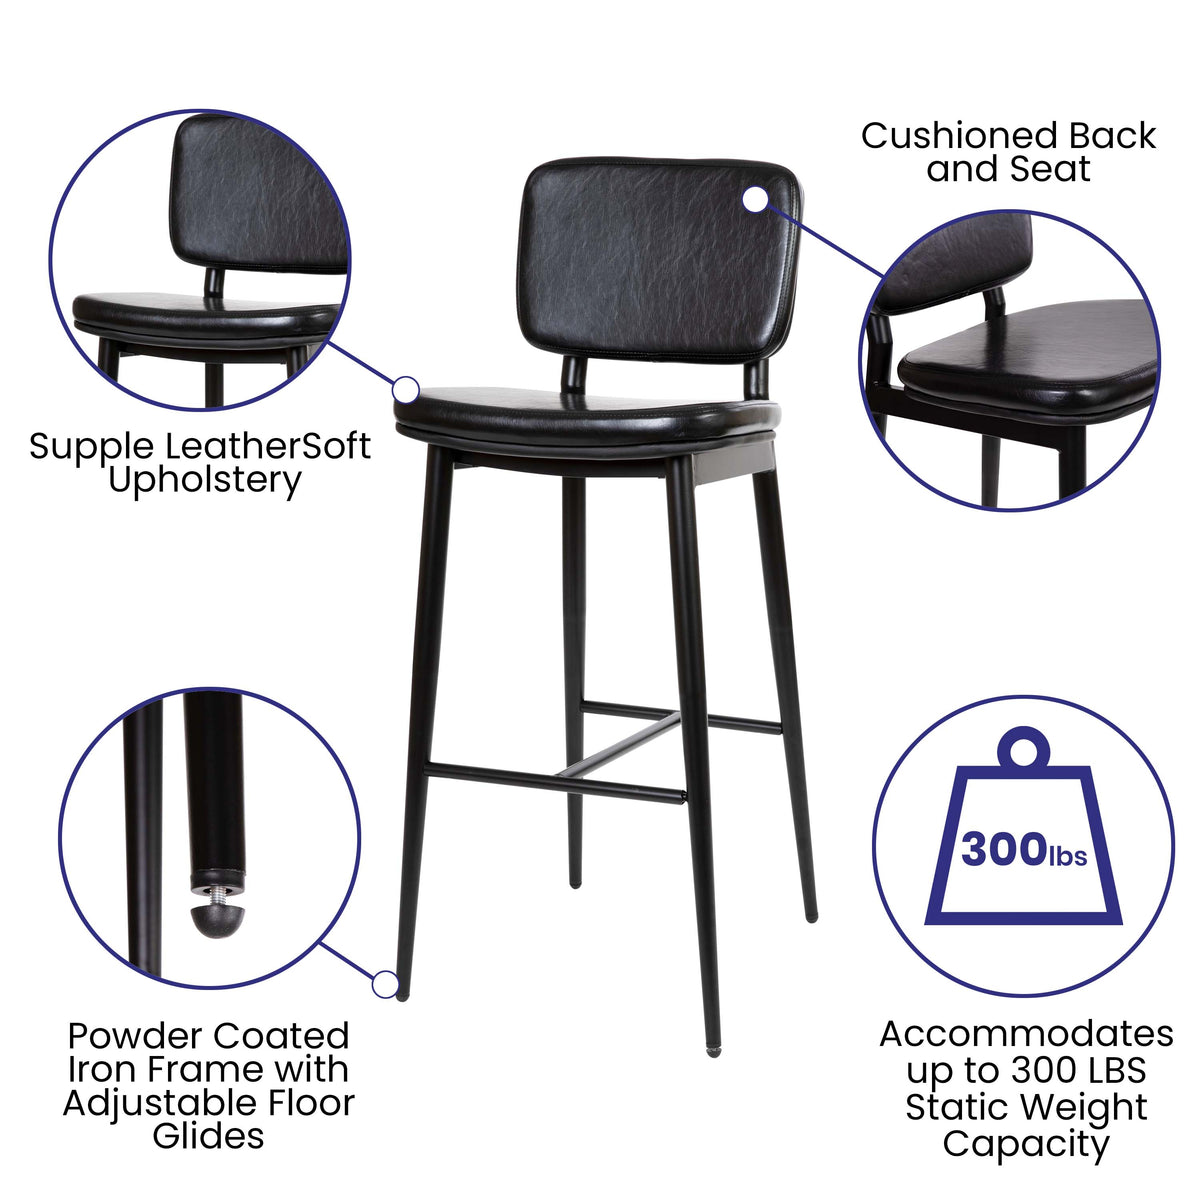 Black |#| Set of 2 Black LeatherSoft Barstools with Black Iron Frame-Integrated Footrest